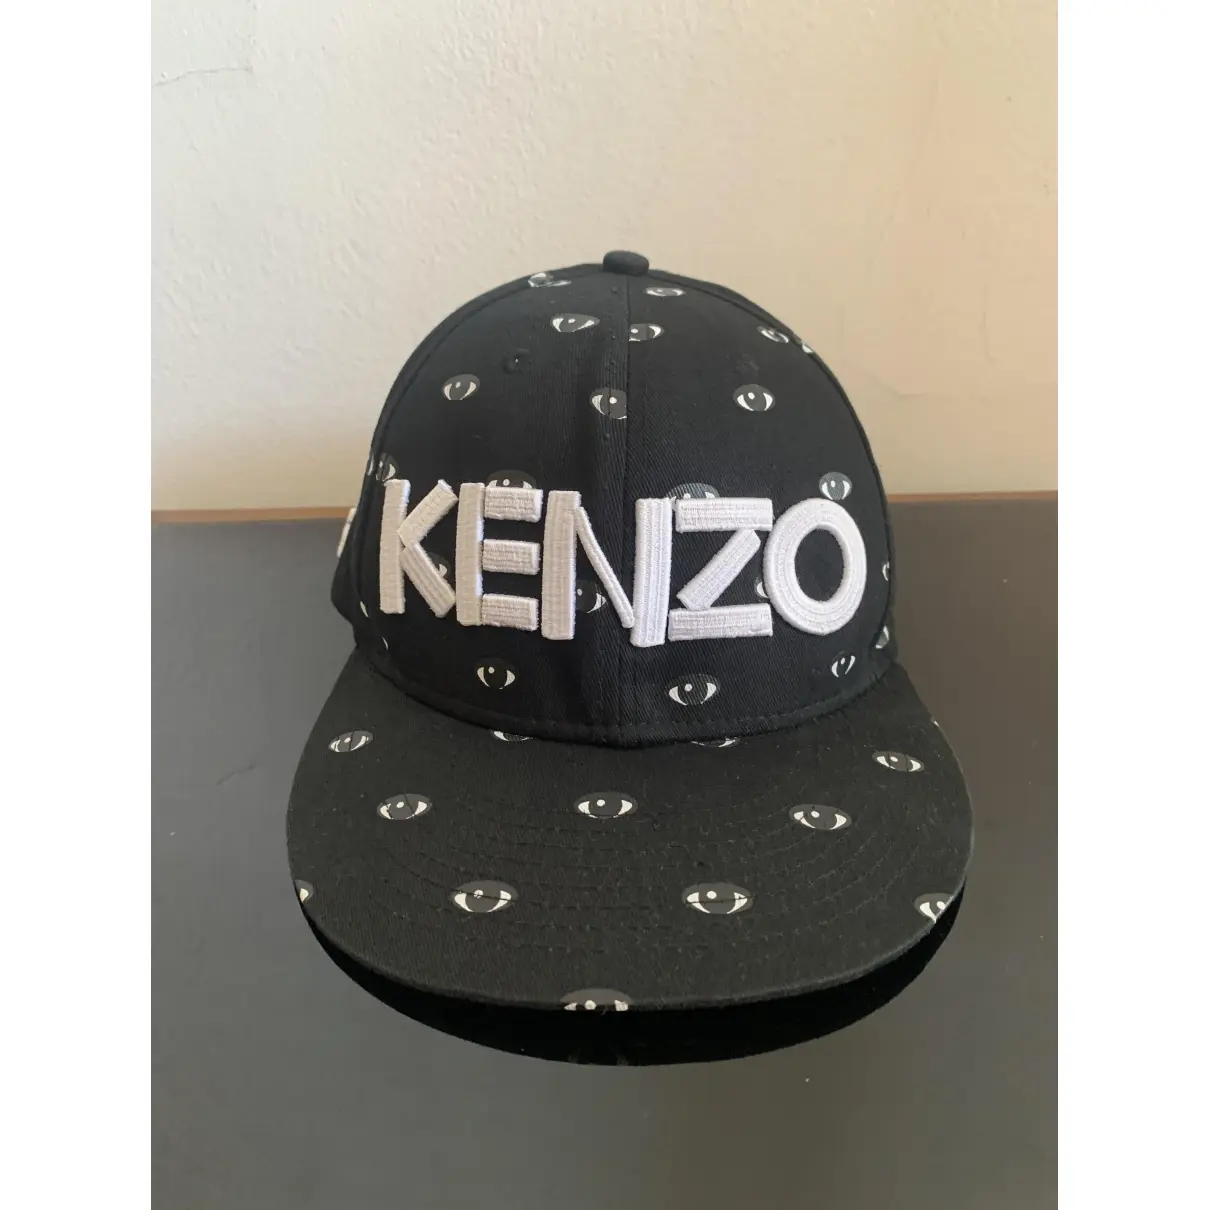 Buy Kenzo Cloth hat online